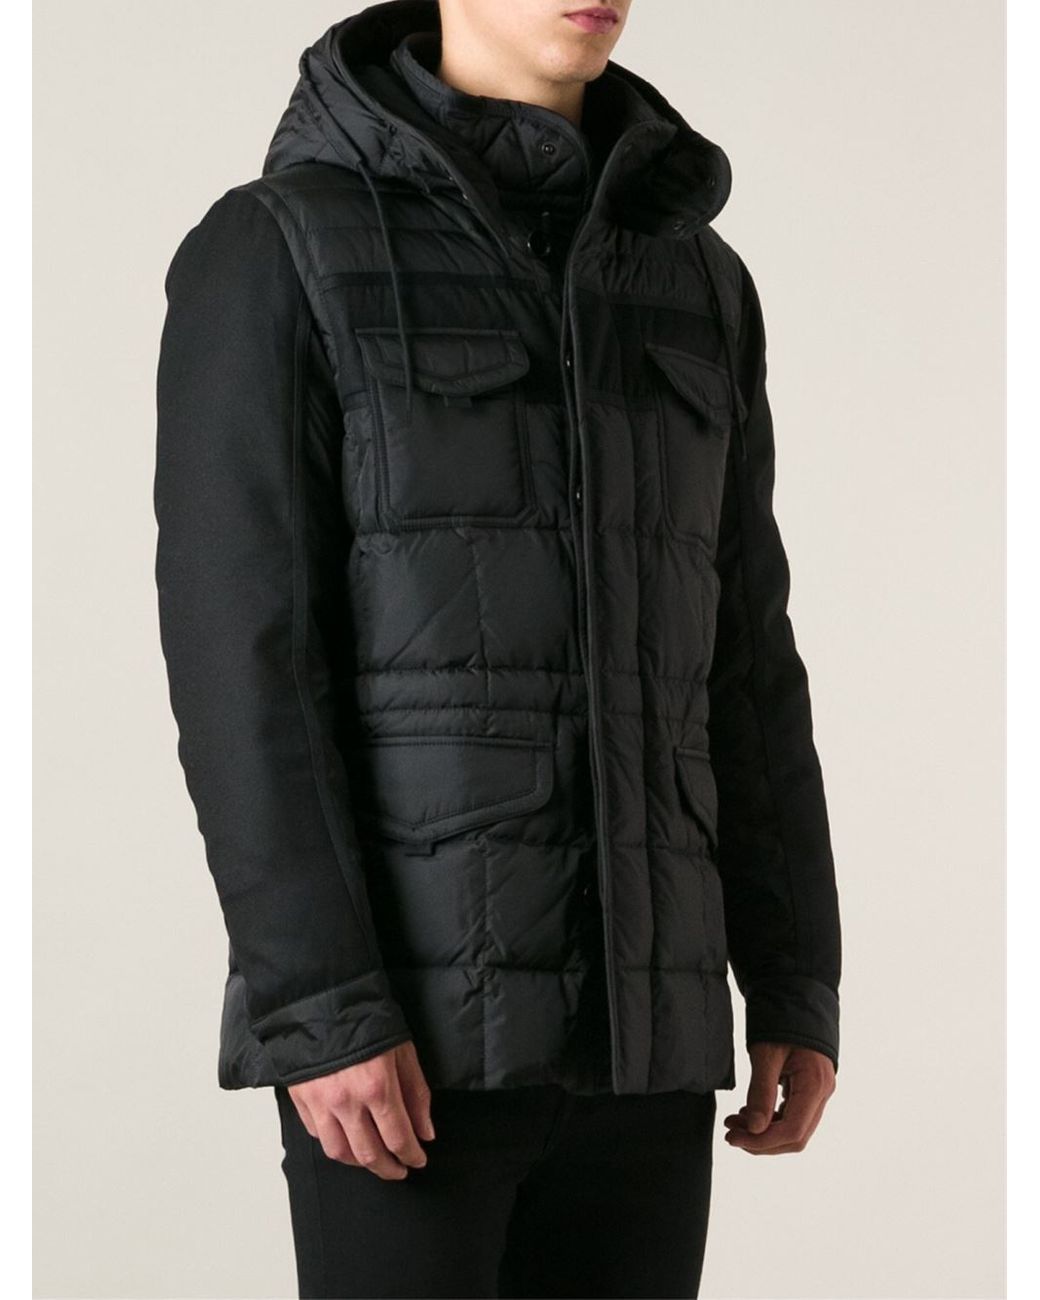 Moncler 'Jacob' Padded Jacket in Black for Men | Lyst